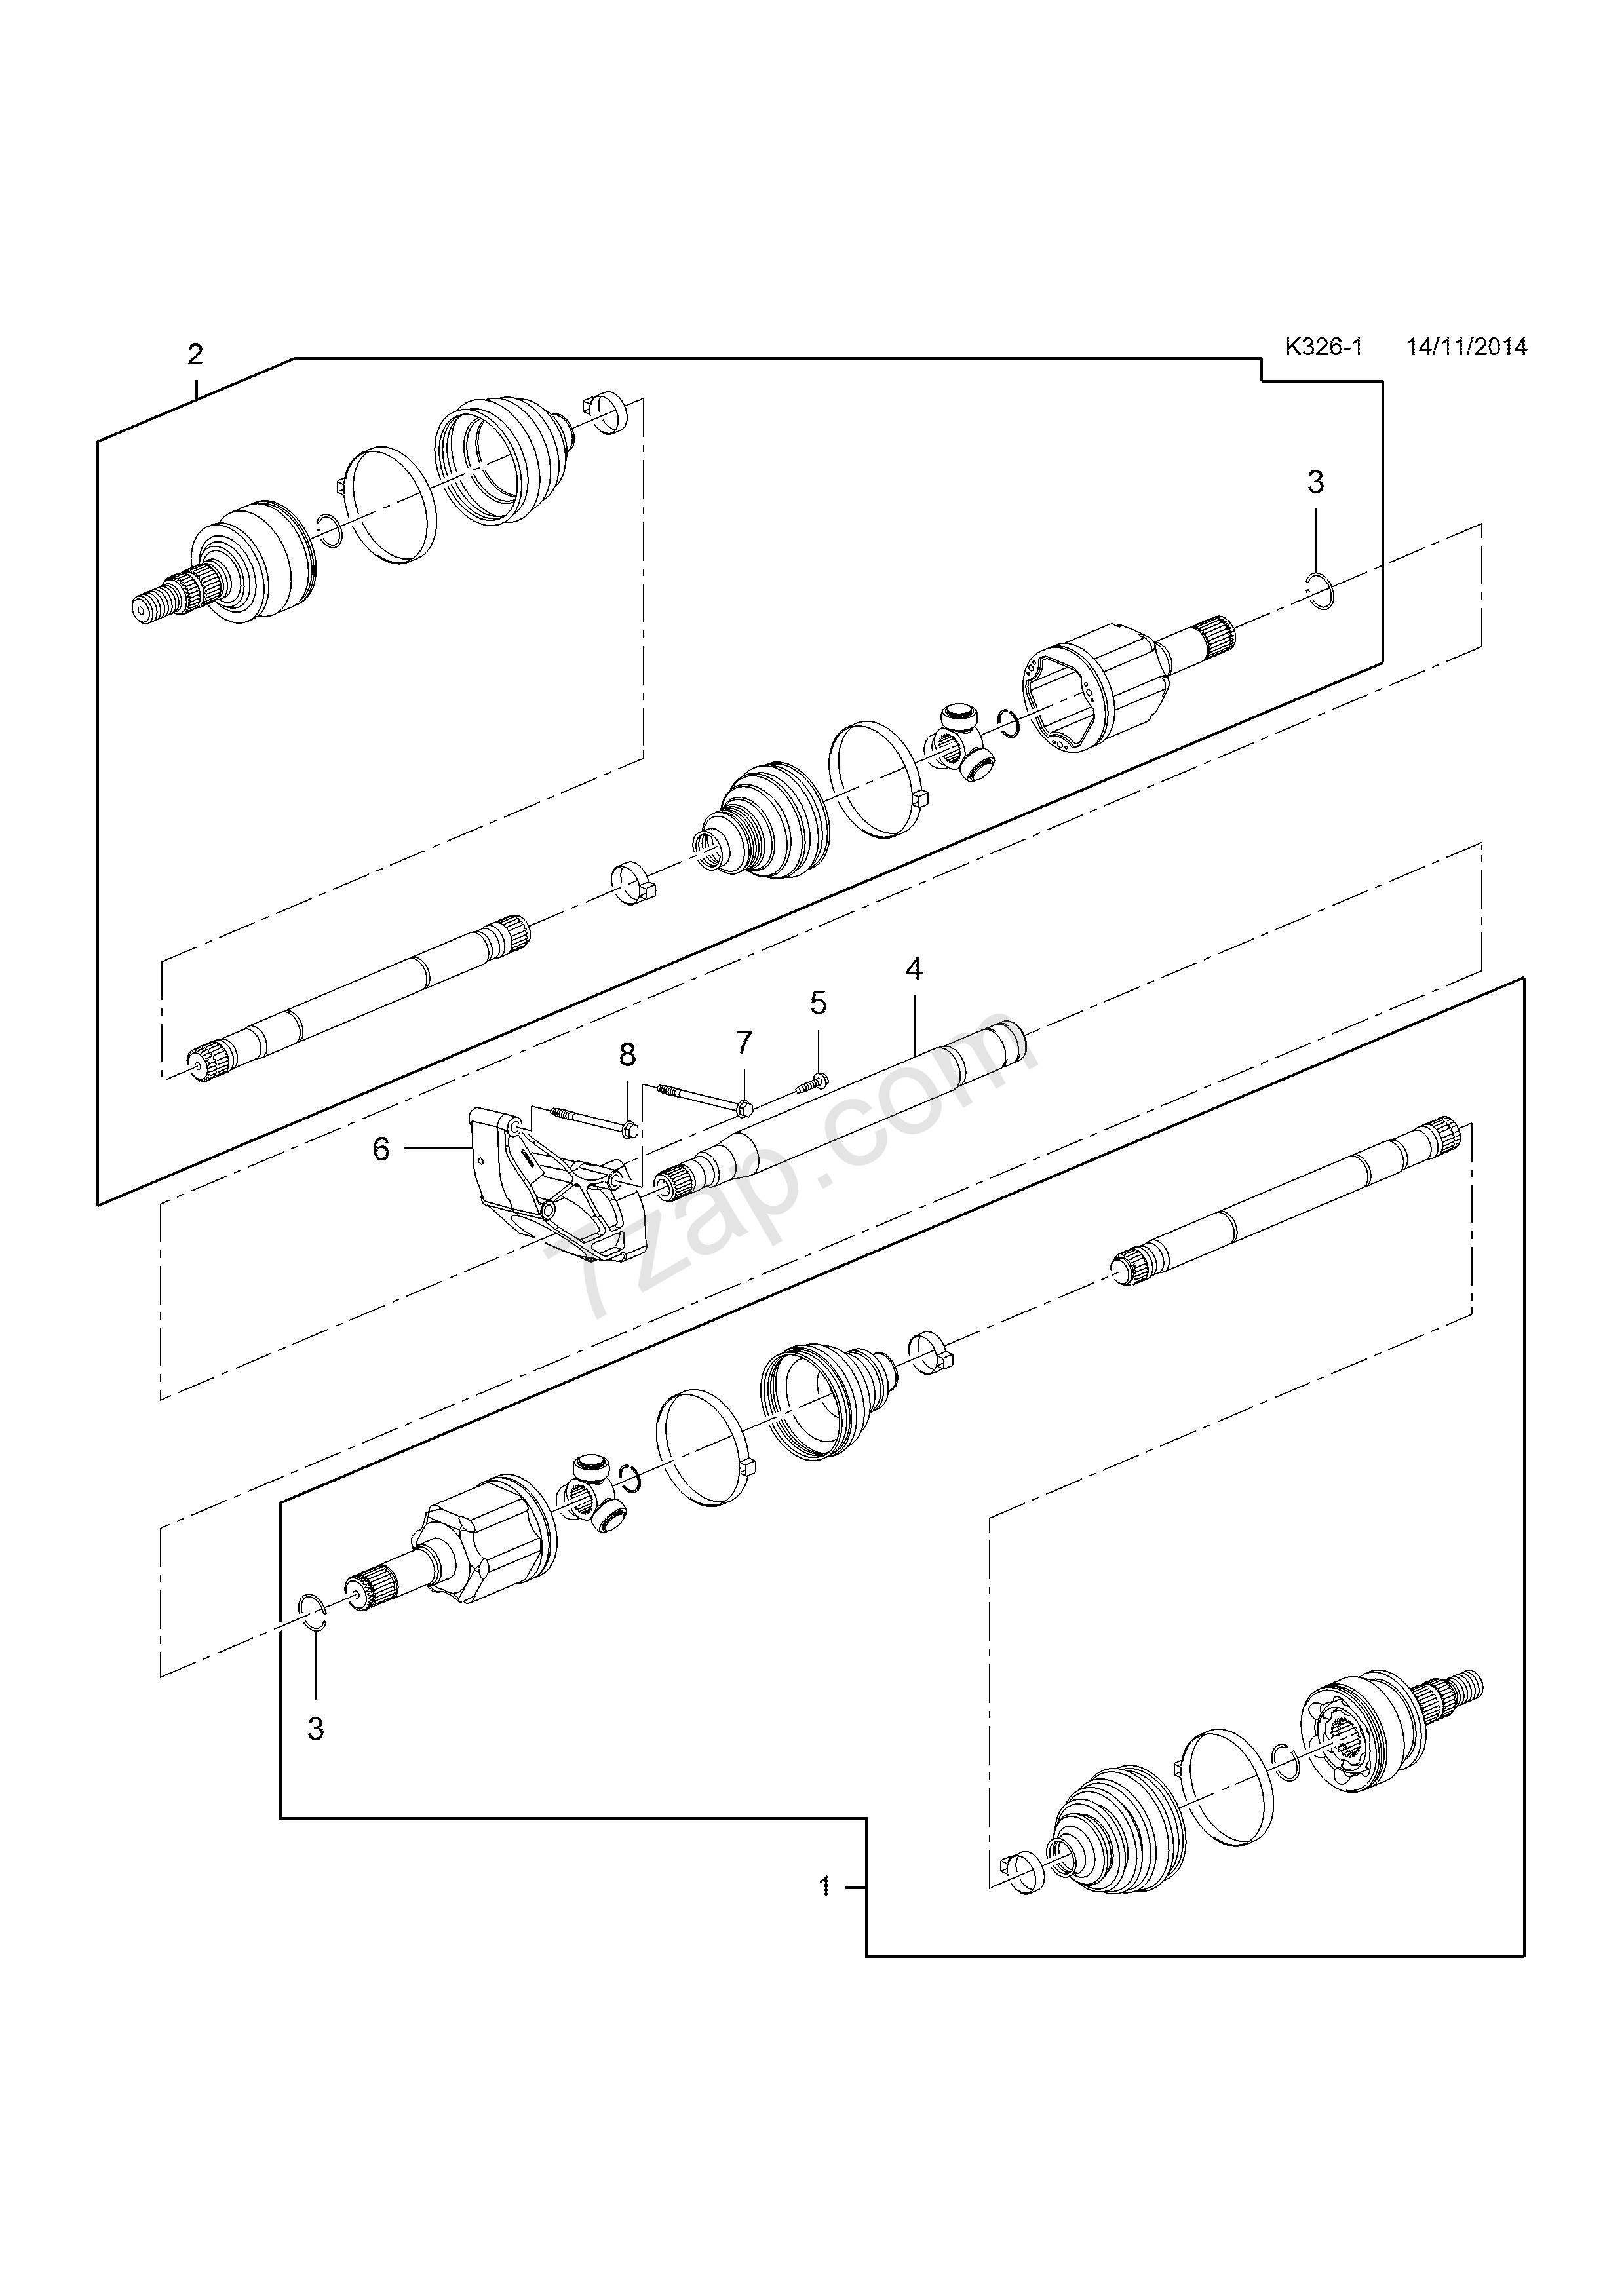 Car Drive Shaft Diagram | My Wiring DIagram